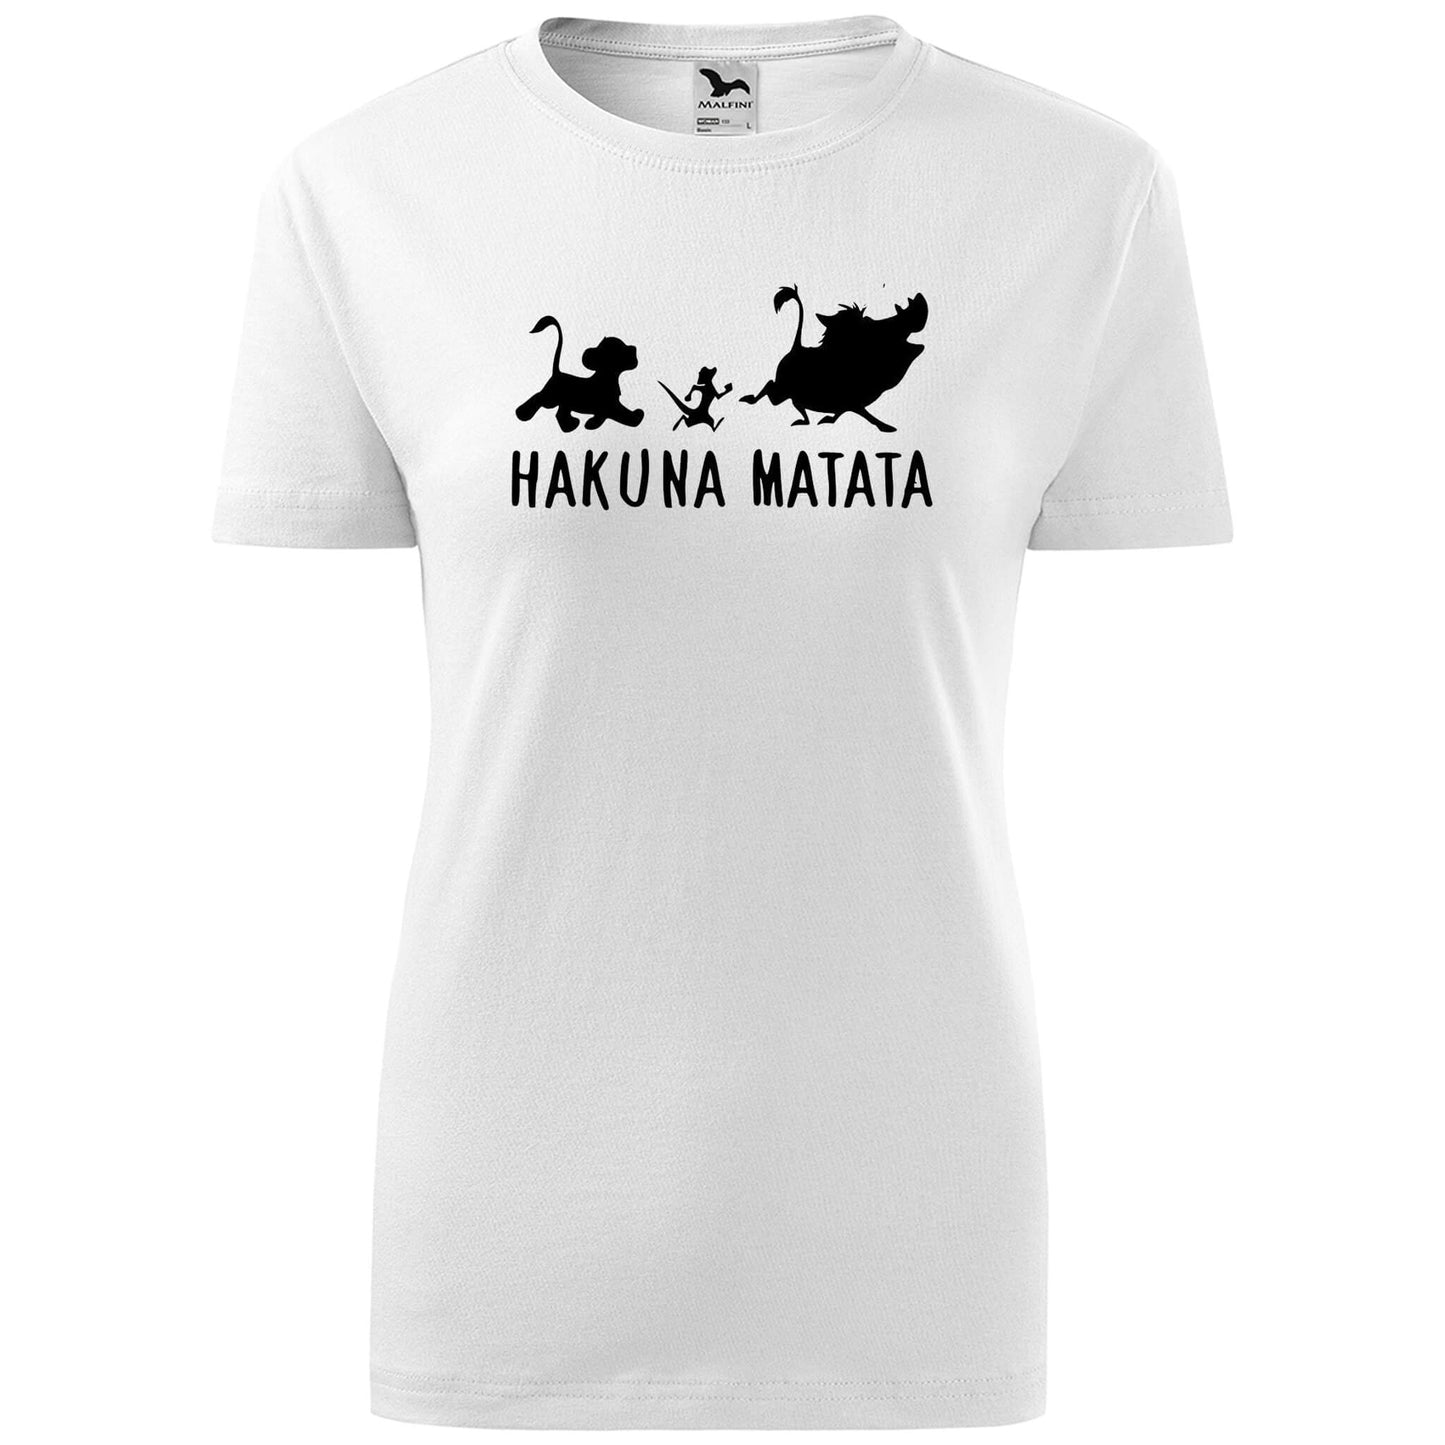 T-shirt - Hakuna matata - rvdesignprint